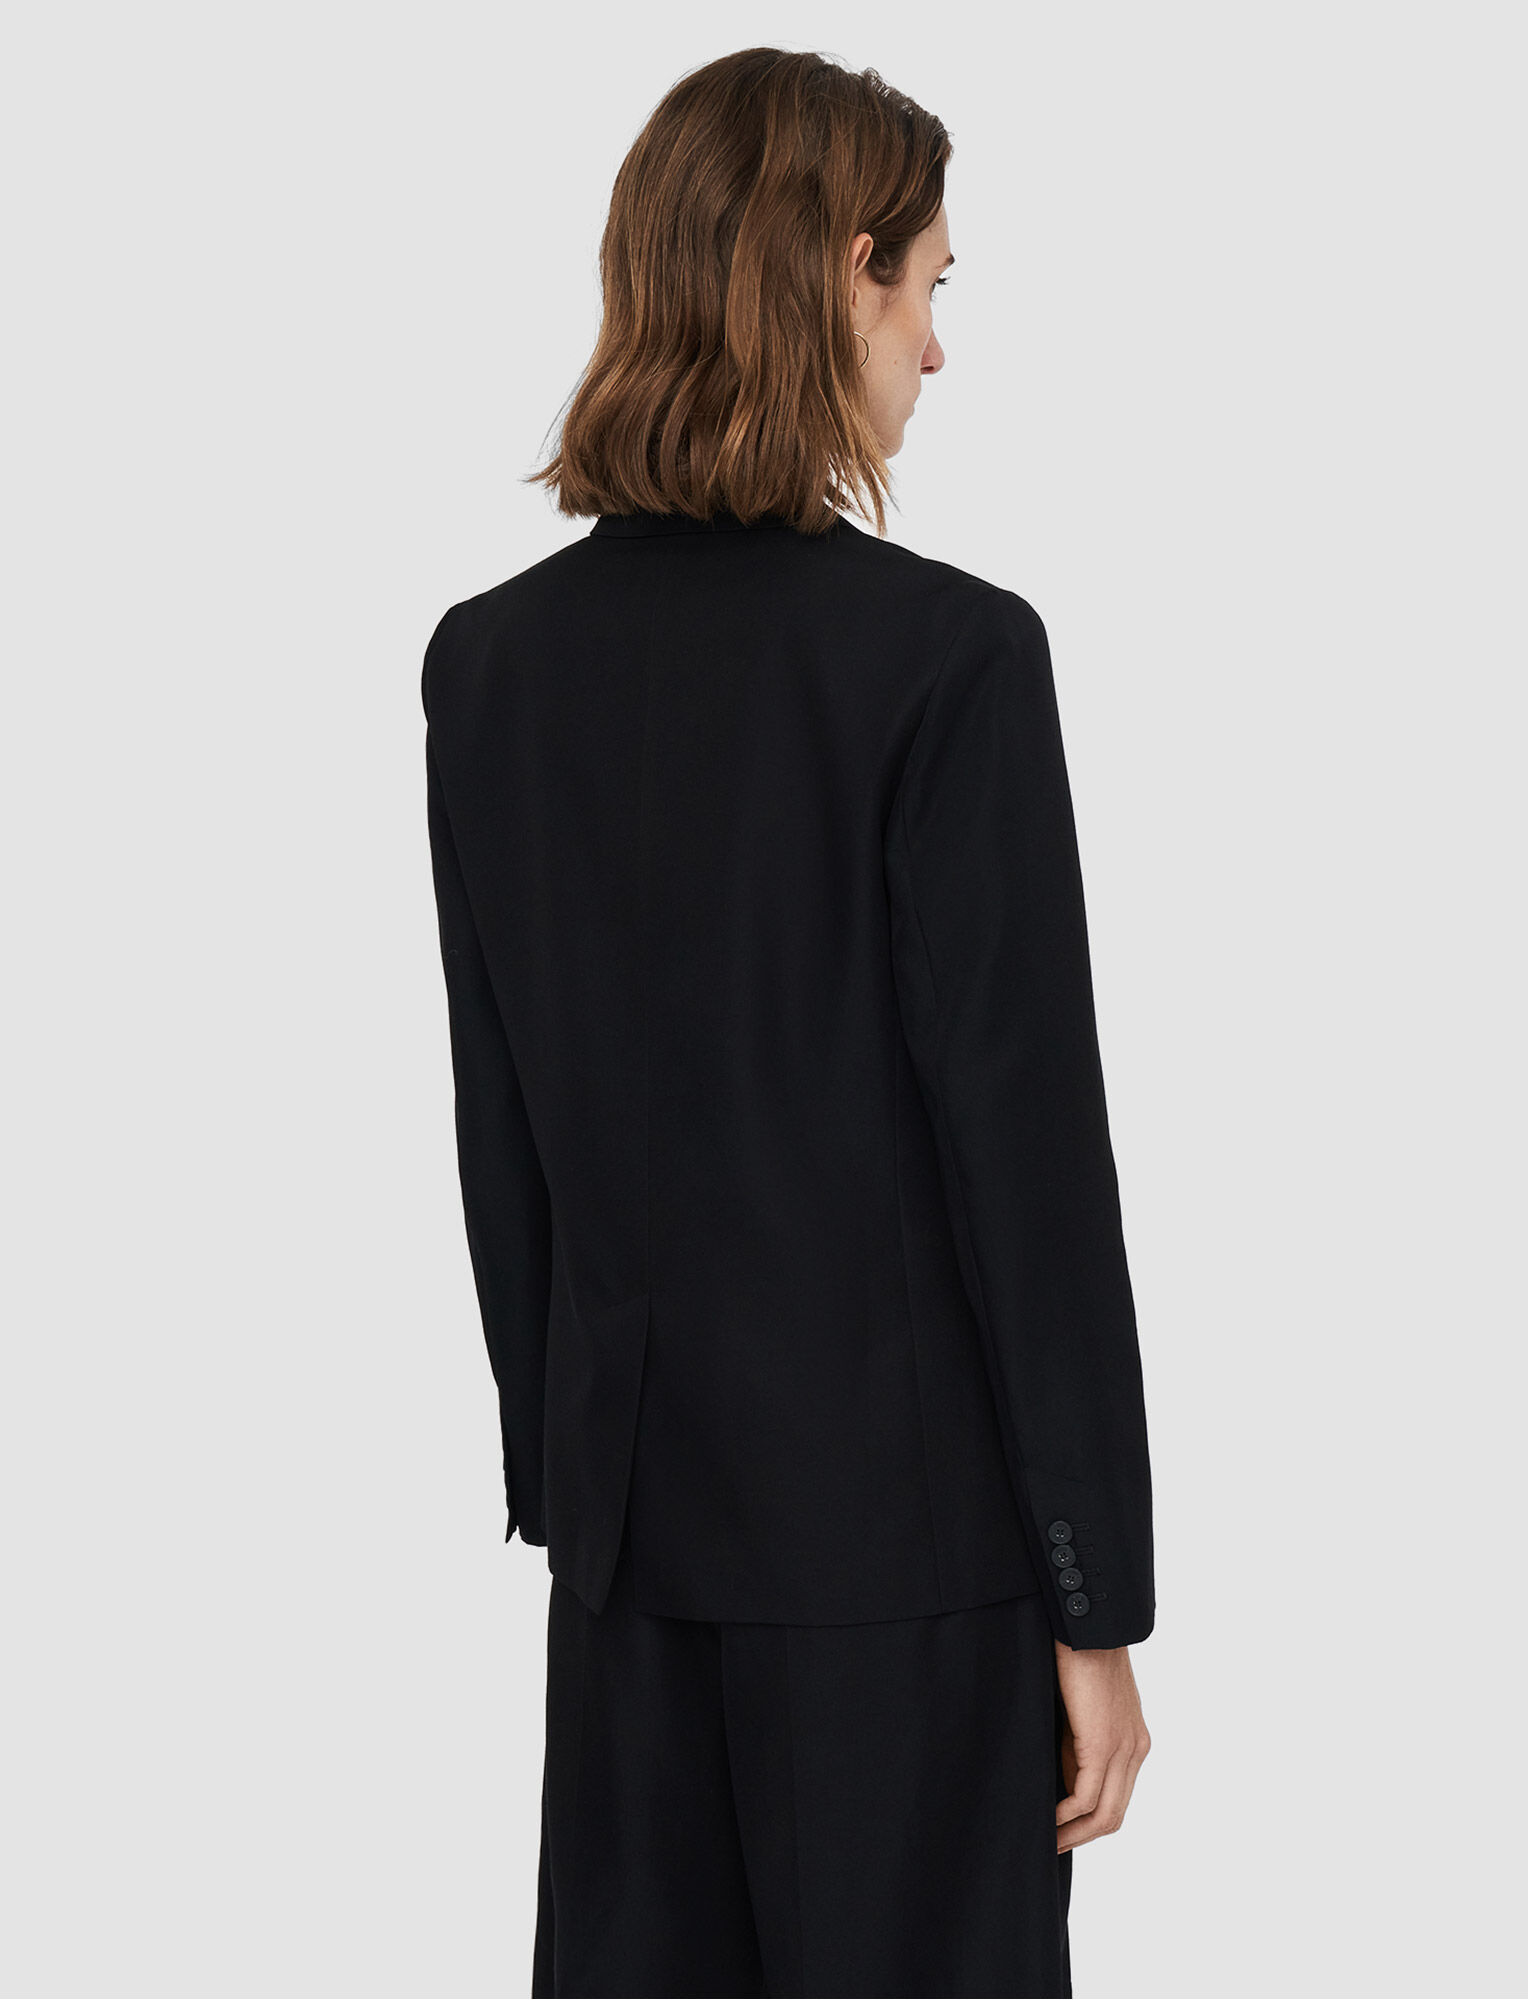 Joseph, Soft Cotton Silk Belmore Jacket, in Black